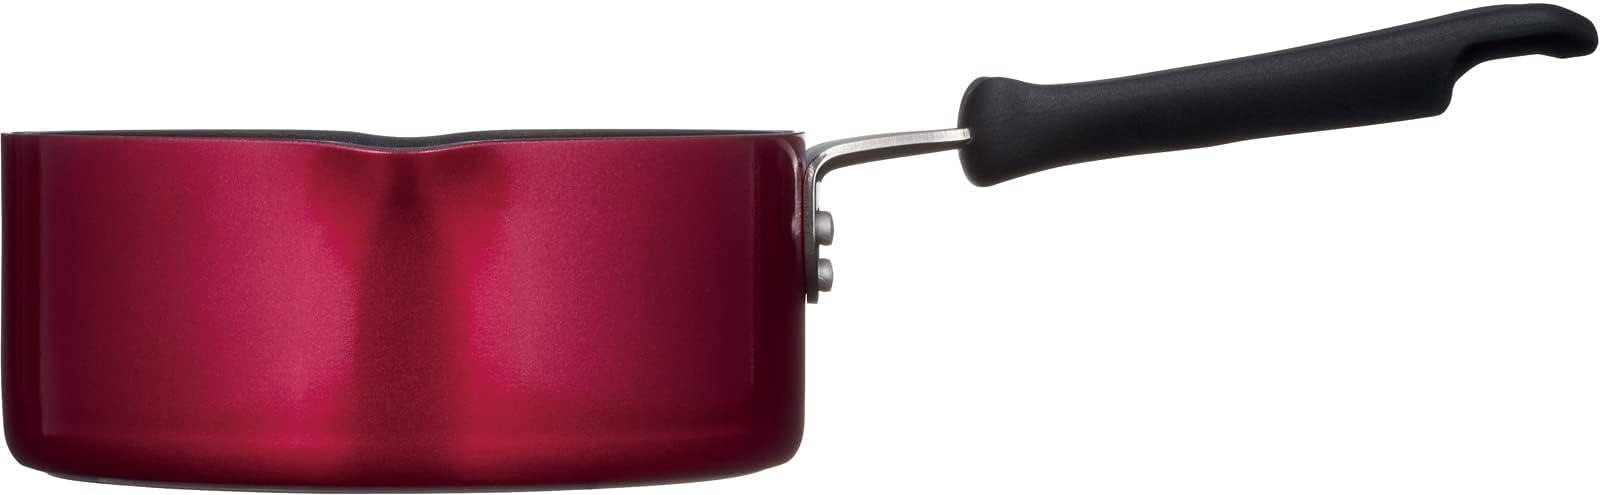 Thermos 耐用系列 16 厘米红色烹饪锅 电磁炉兼容 - KNA-016S